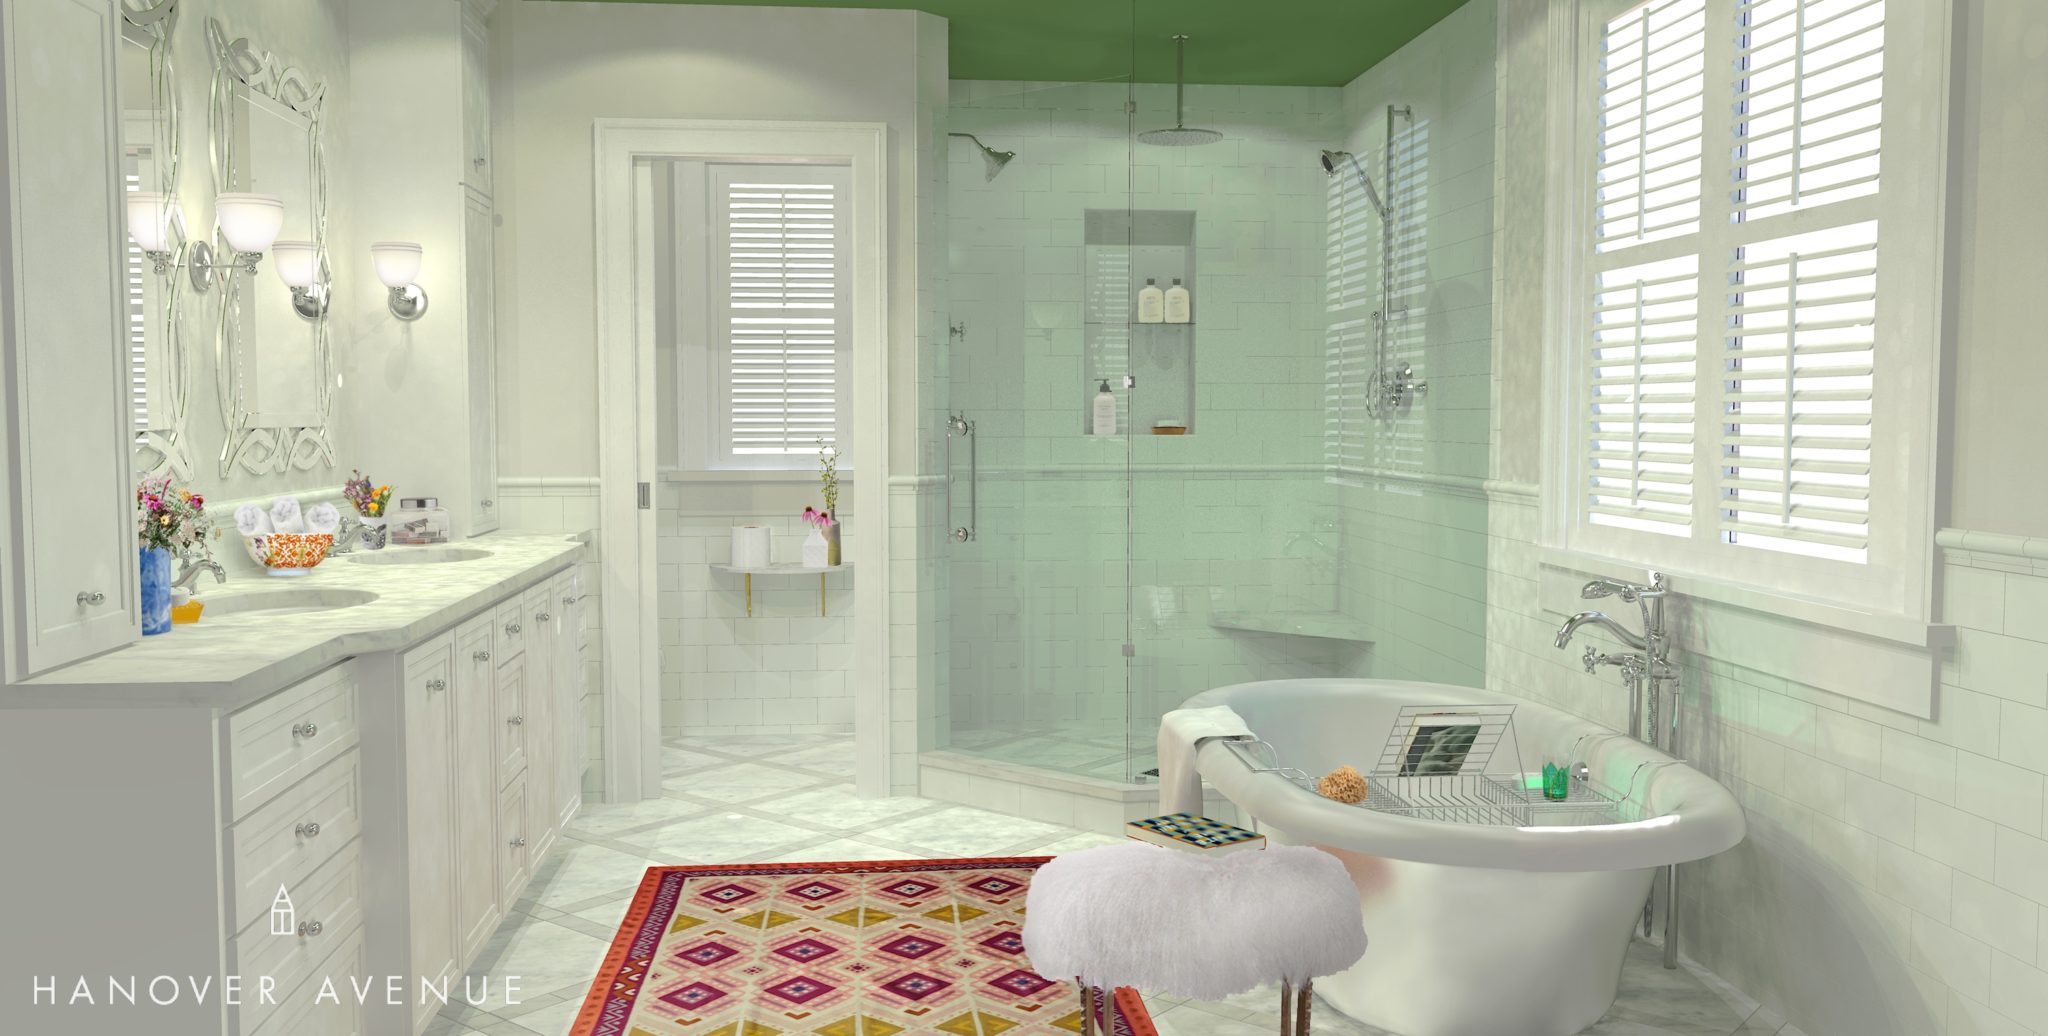 shower view, bathroom, spring clean, shannon kaye, lowe's, kohler, color